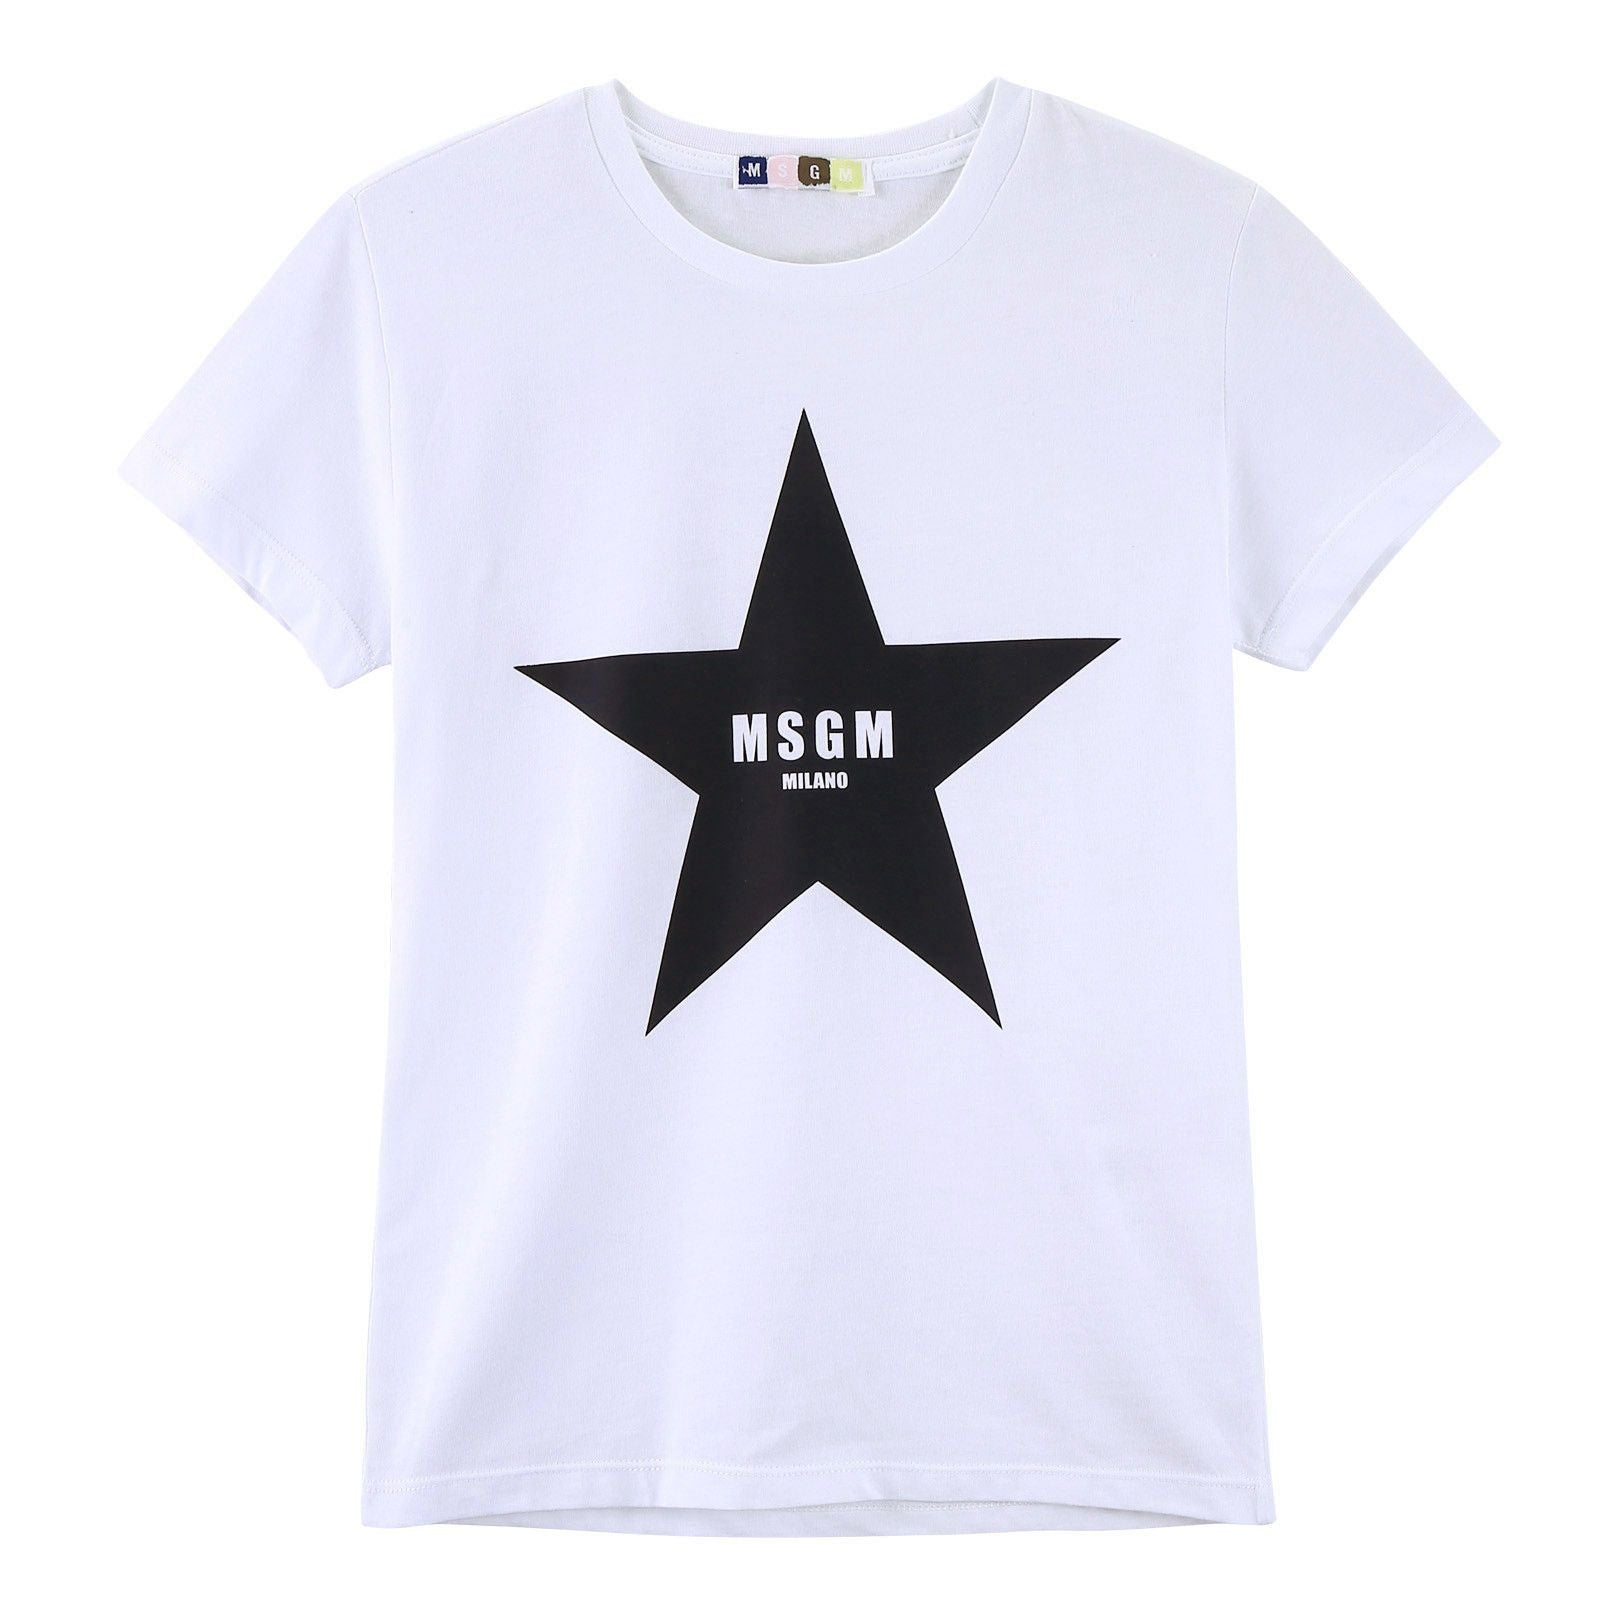 Boys White Cotton Jersey T-Shirt With Black Star Print - CÉMAROSE | Children's Fashion Store - 1